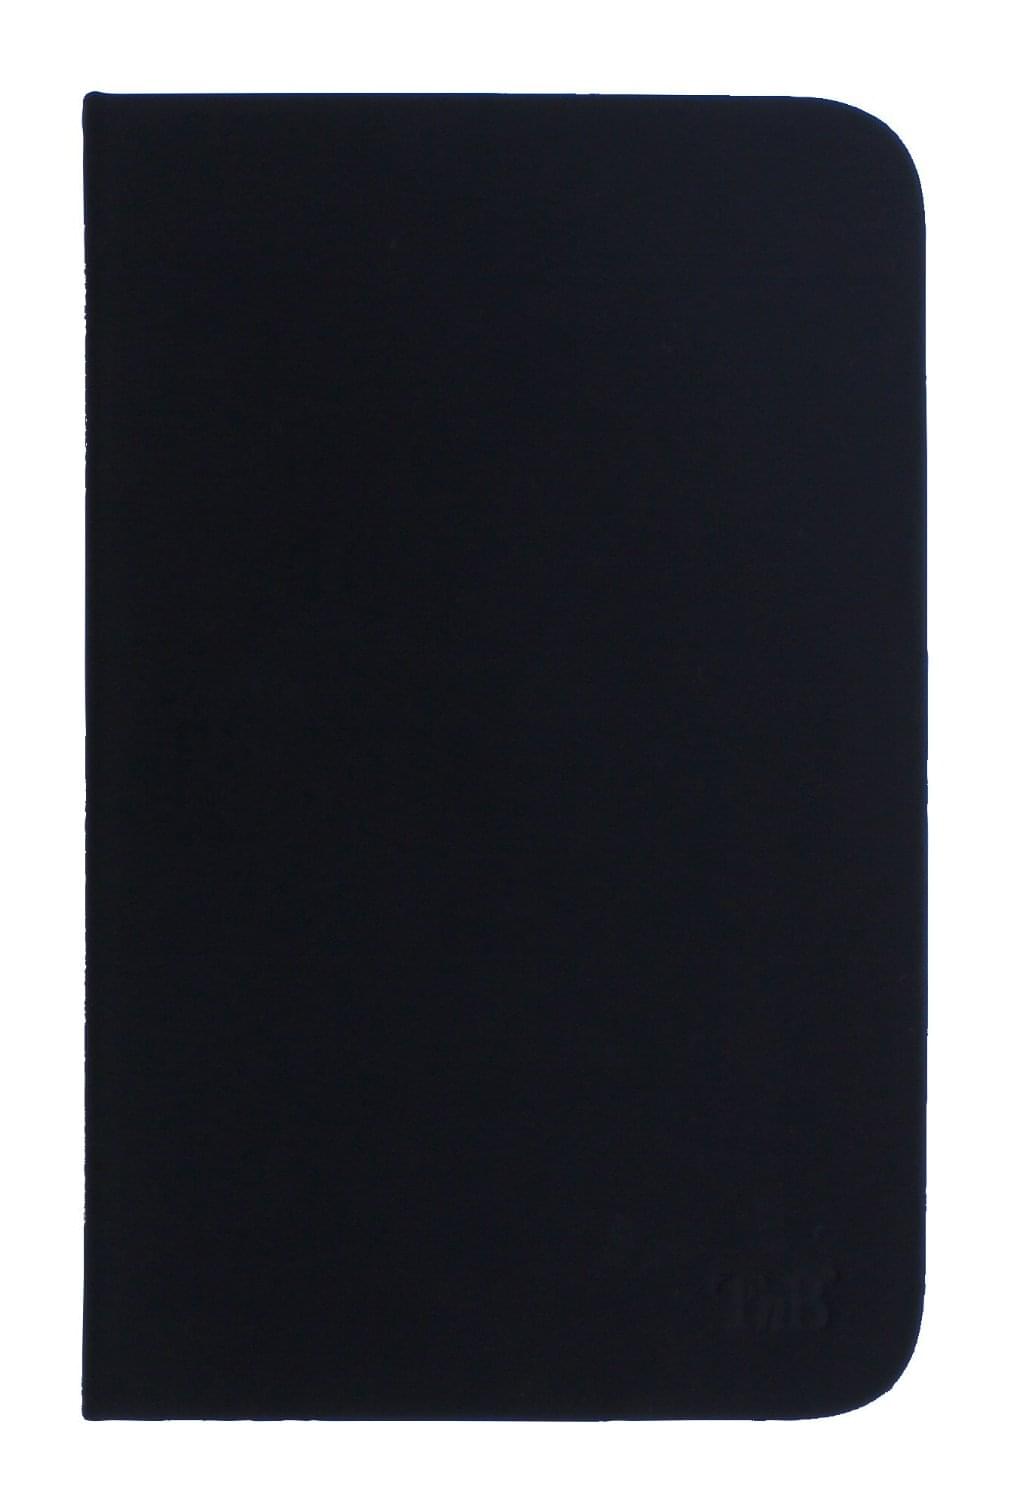 Etui Folio Galaxy Tab 3 8" Noir - Accessoire tablette T'nB - 0